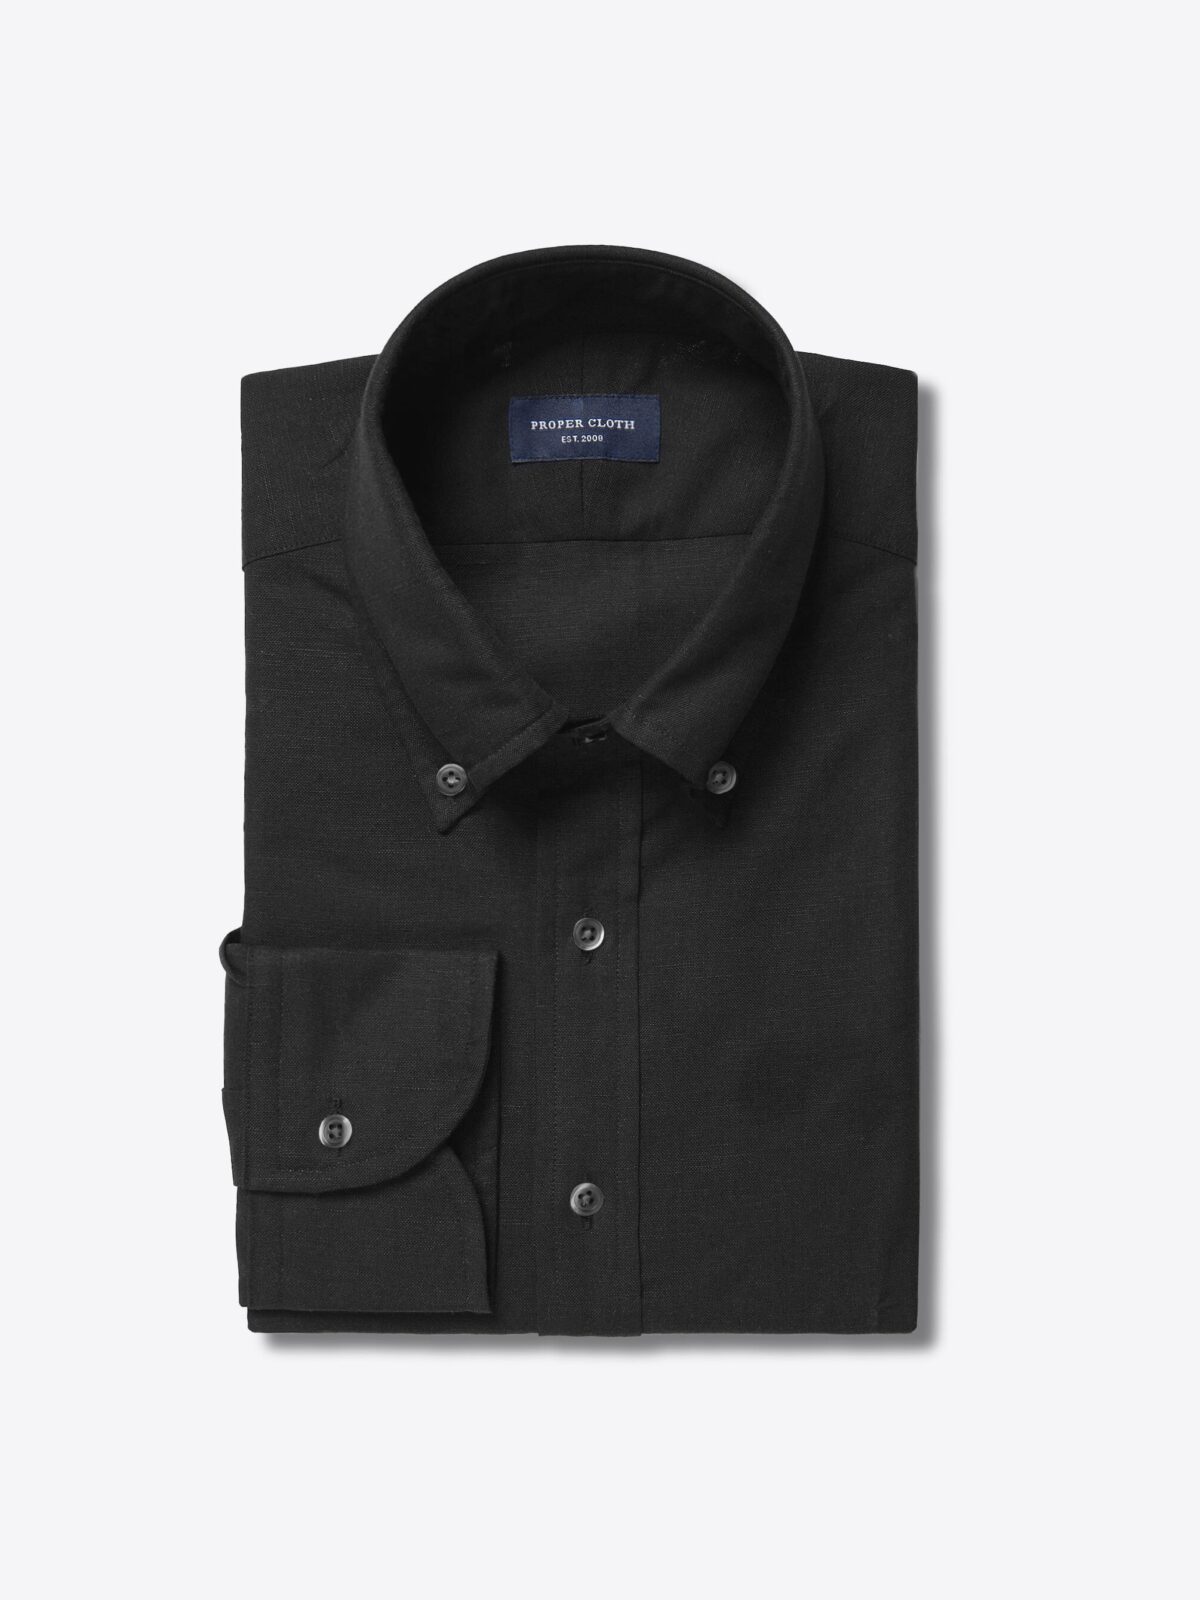 Portuguese Black Cotton Linen Blend Custom Made Shirt Shirt by